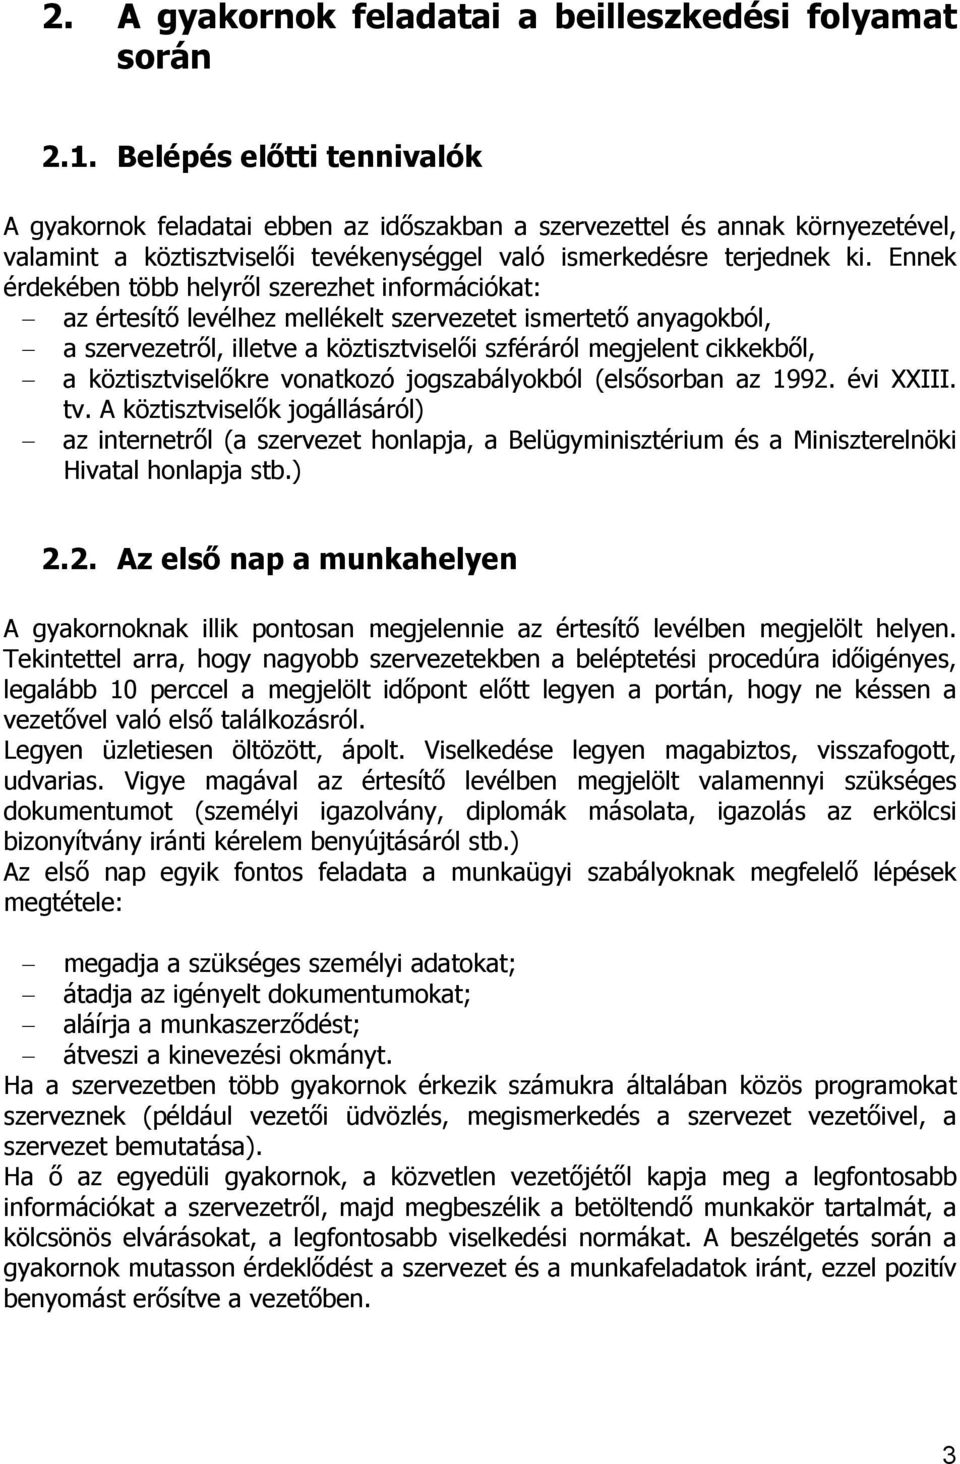 A GYAKORNOK FELADATAI MÓDSZERTANI FÜZET - PDF Free Download